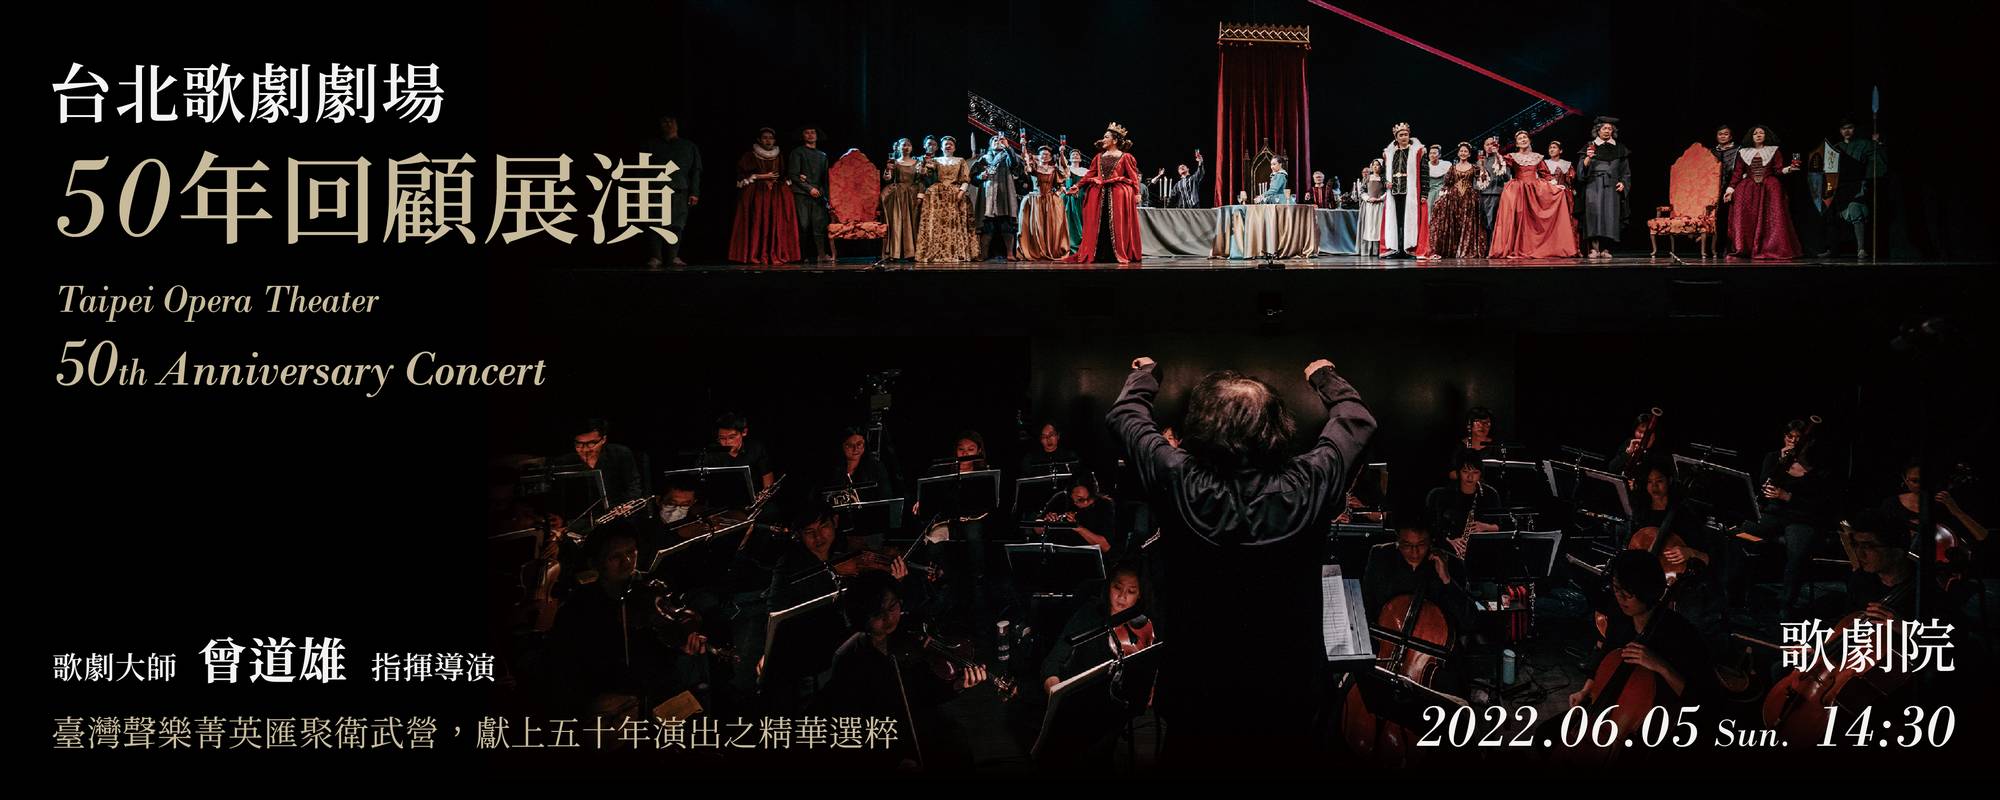 Taipei Opera Theater 50th Anniversary Concert